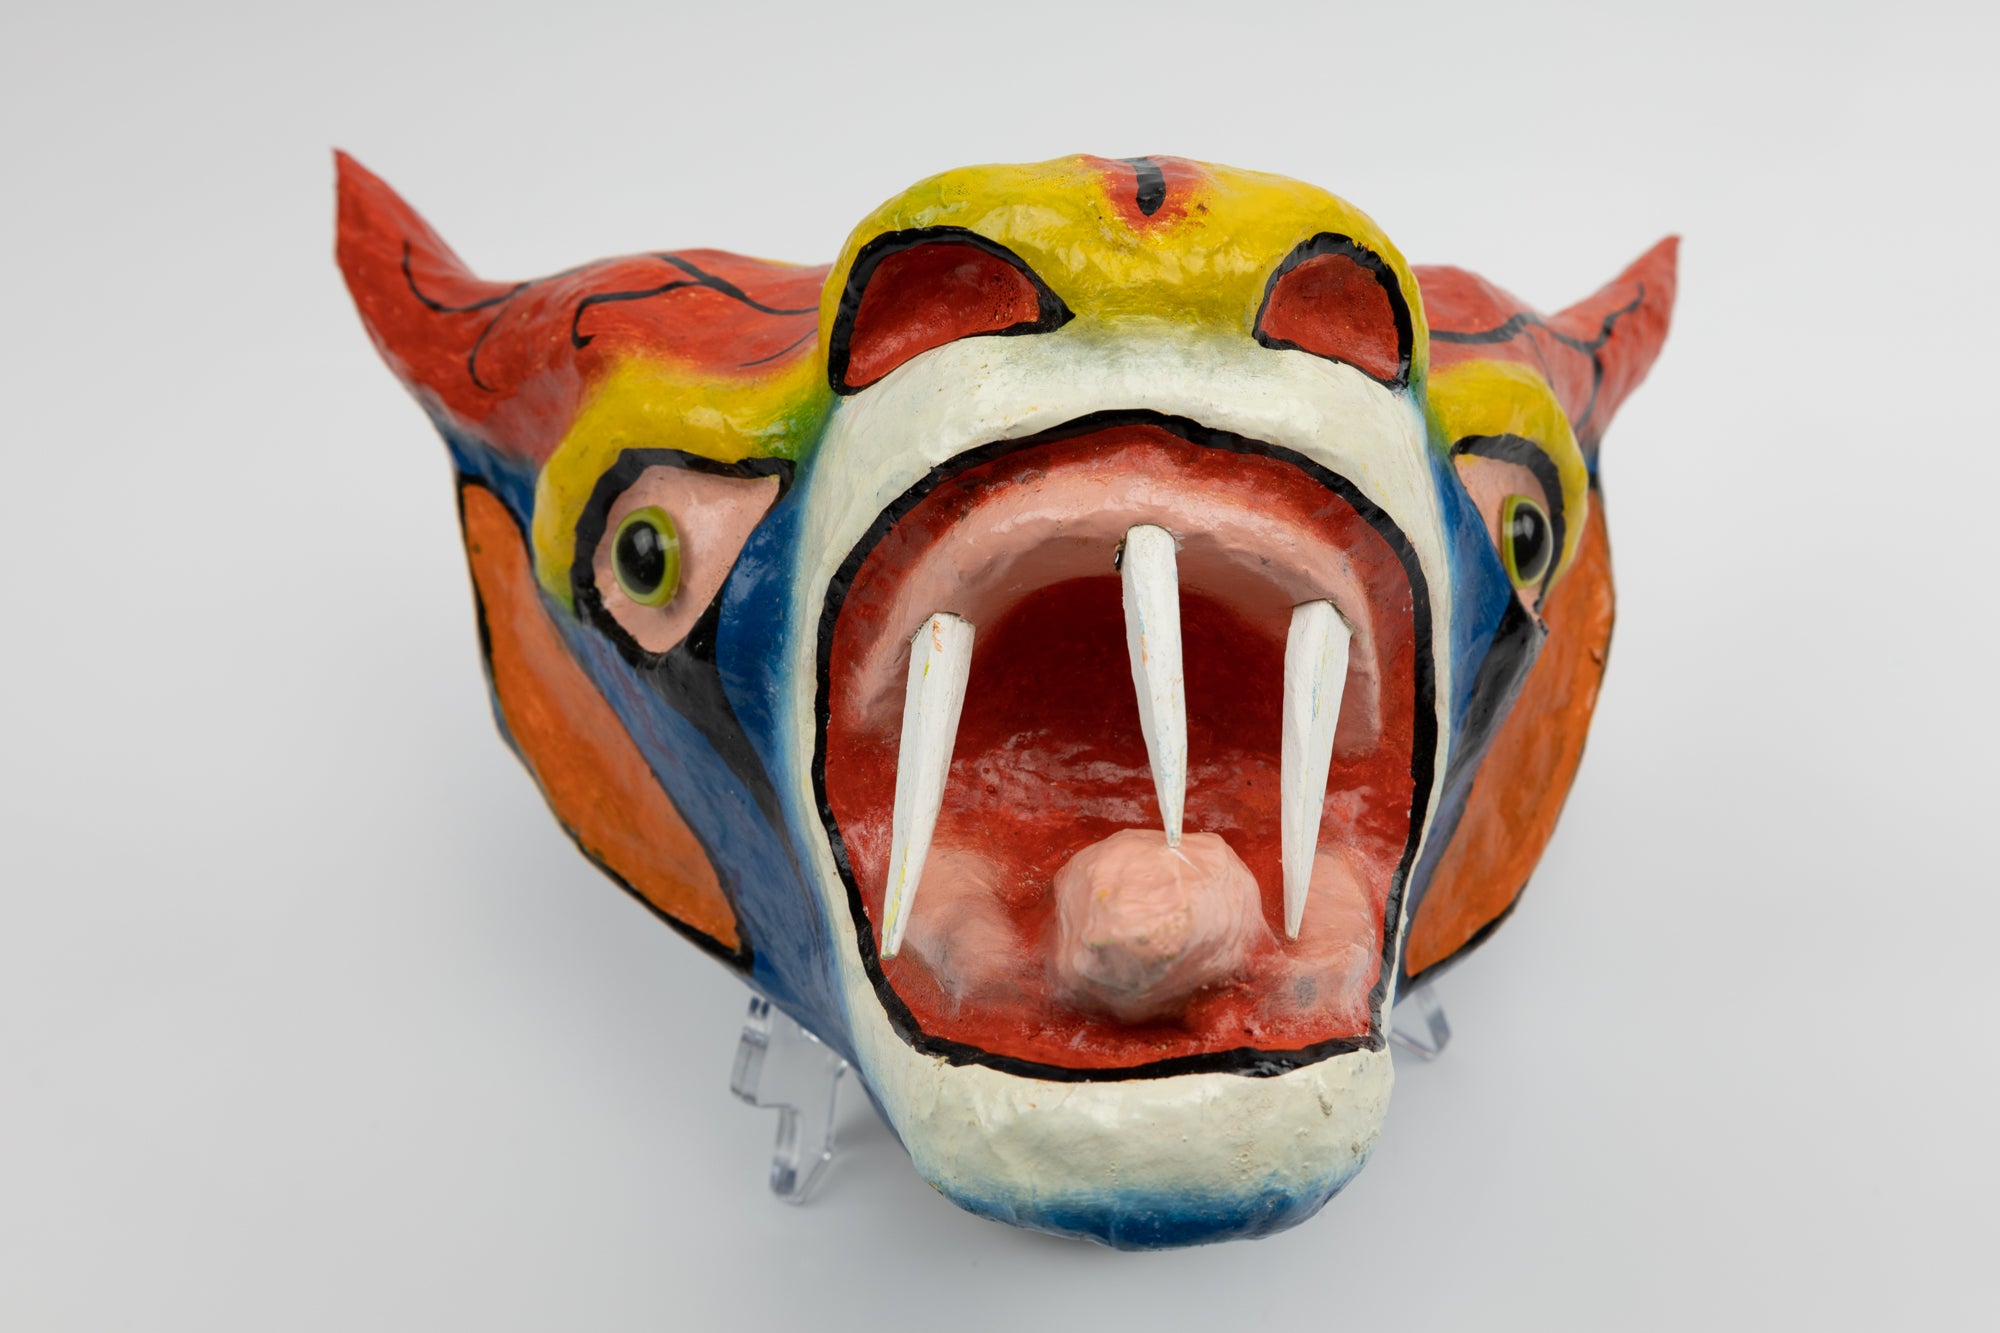 Orange Horns Three Teeth Paper Mache Mask